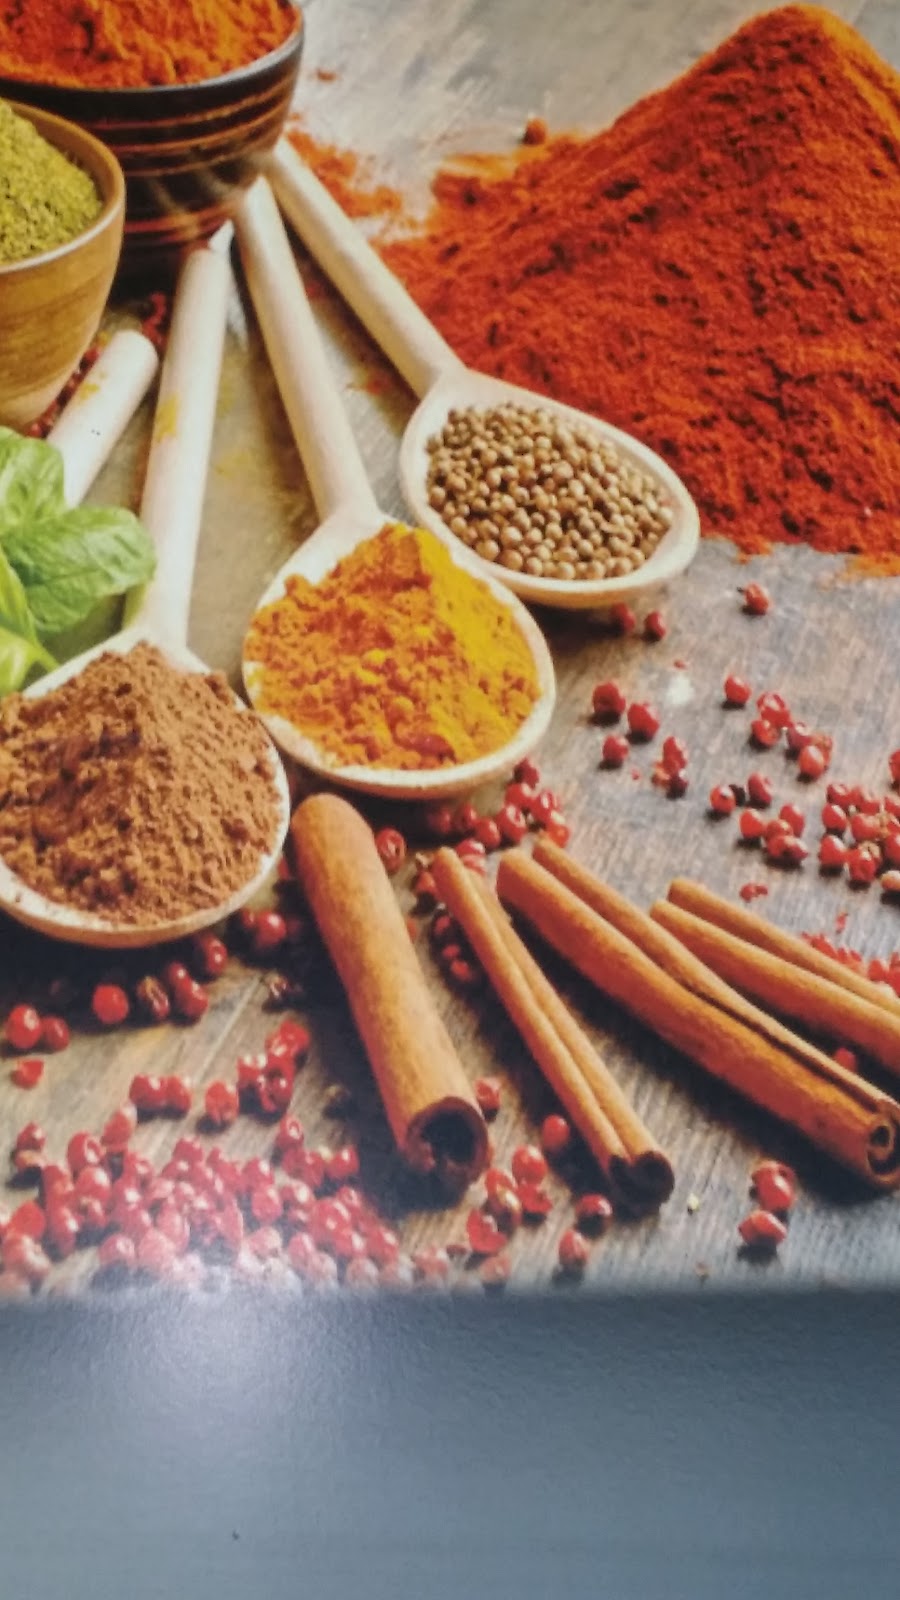 Spicy Tadka Indian and Pakistani Restaurant | restaurant | 196A Lyons Rd, Drummoyne NSW 2047, Australia | 0290080875 OR +61 2 9008 0875